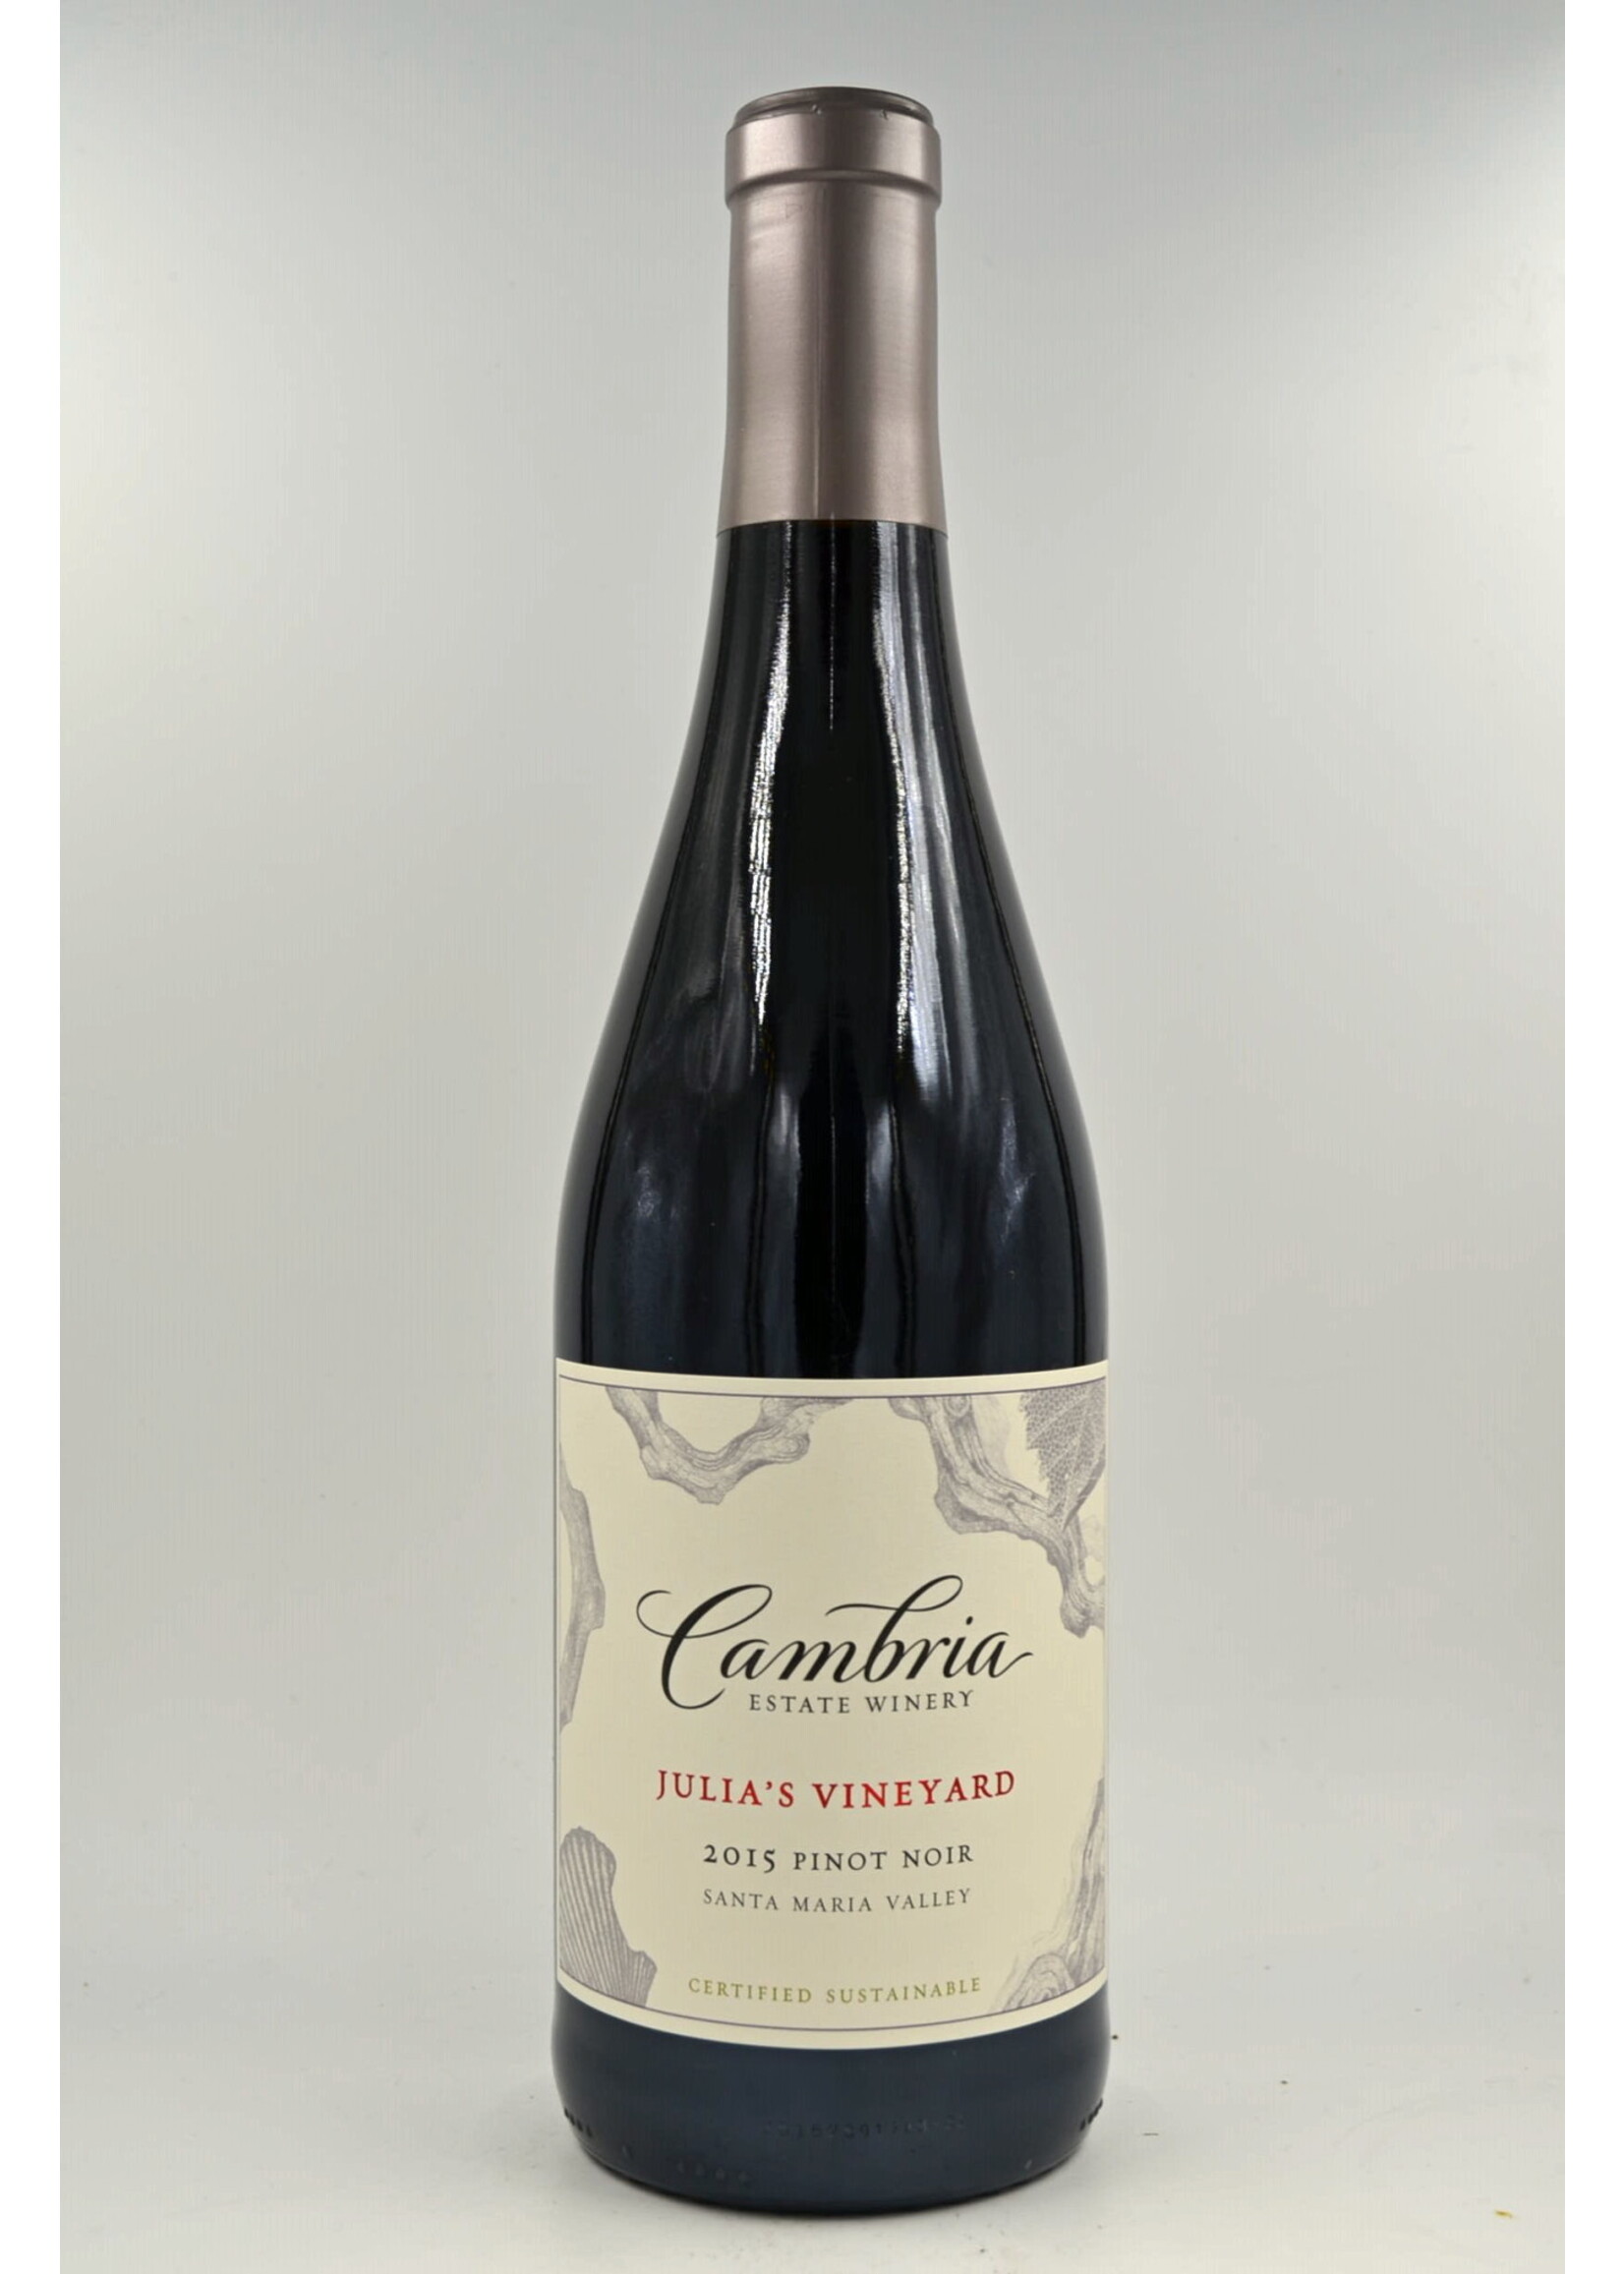 2015 Pinot Noir Julia's Vineyard Cambria Estate